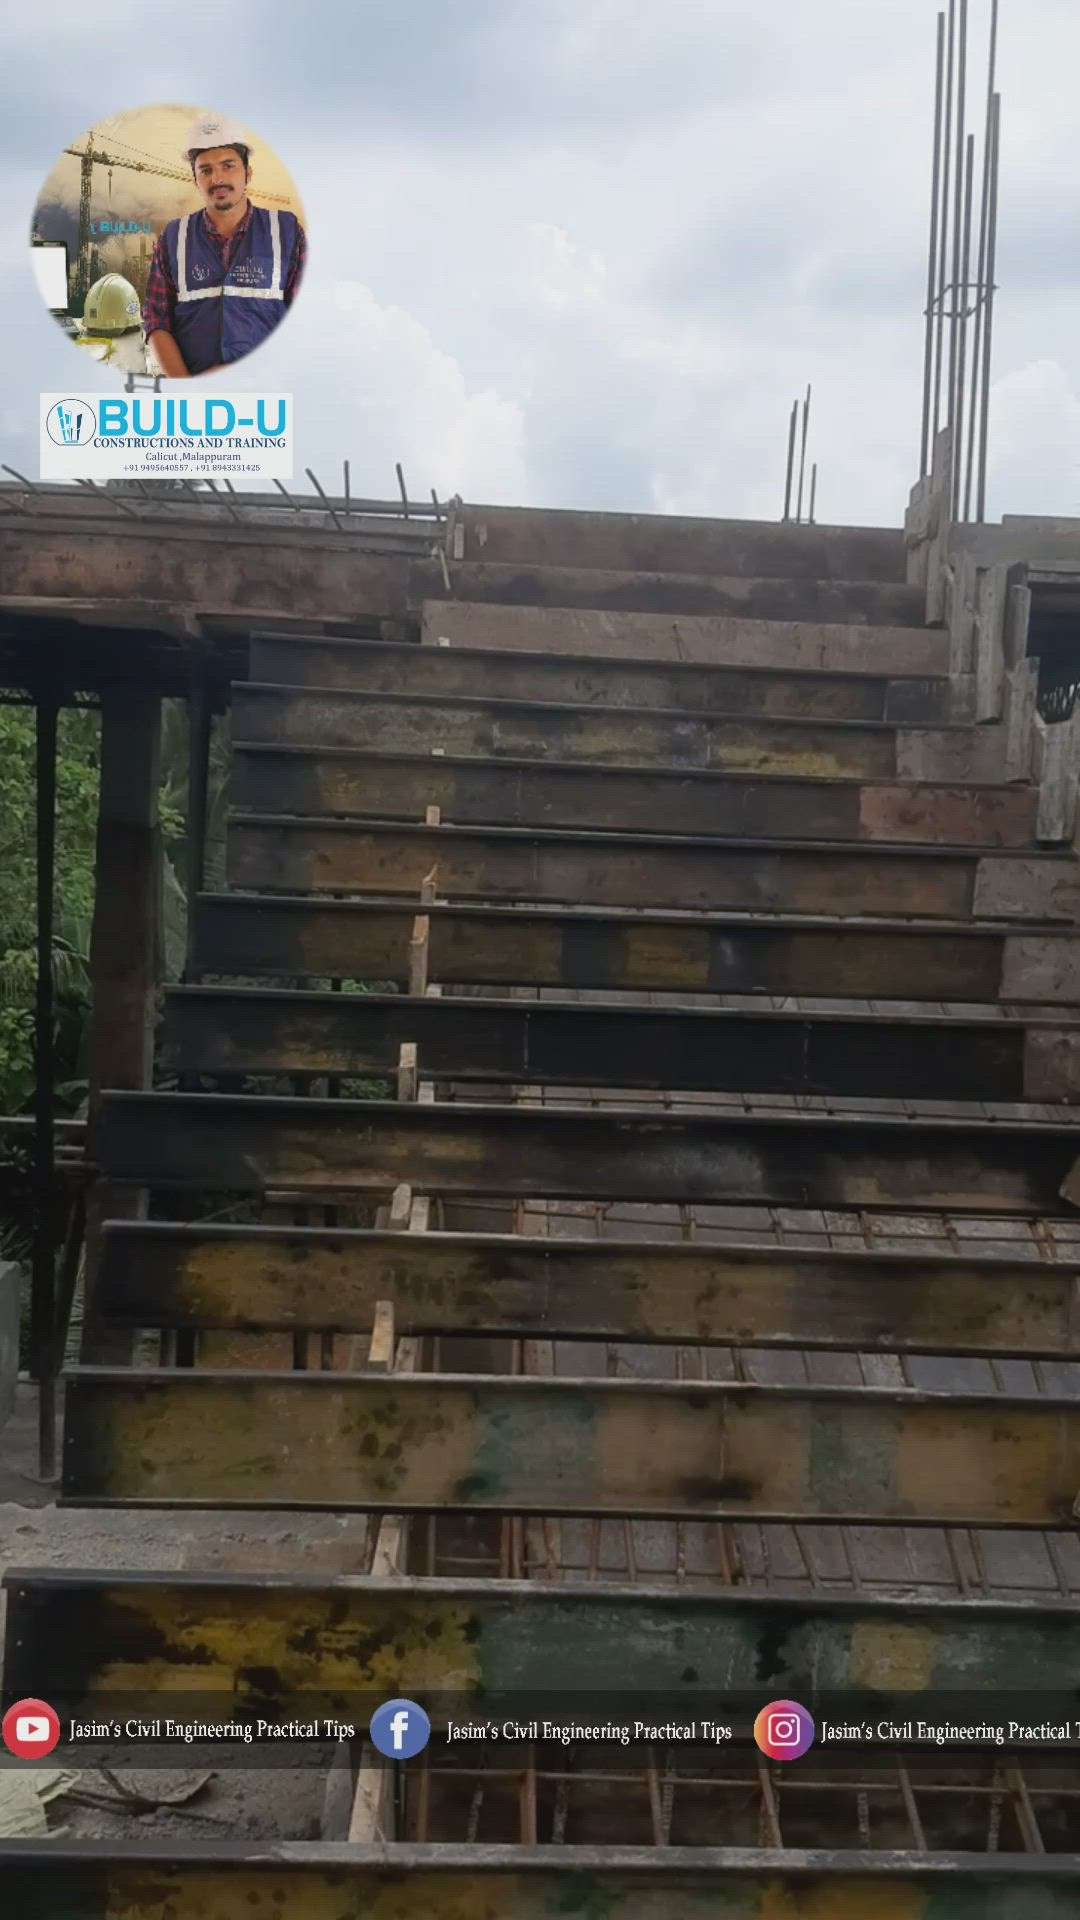 Staircase design
#construction  #jasimstips #laterite #engineering #buildingmaterials #jasimscivilengineering 
#engineerjasim
#builduworkshop #buildutraining 
#വീട് #എൻ്റെവീട് #house_construction
#Jasims_Civil_Engineering_Tips